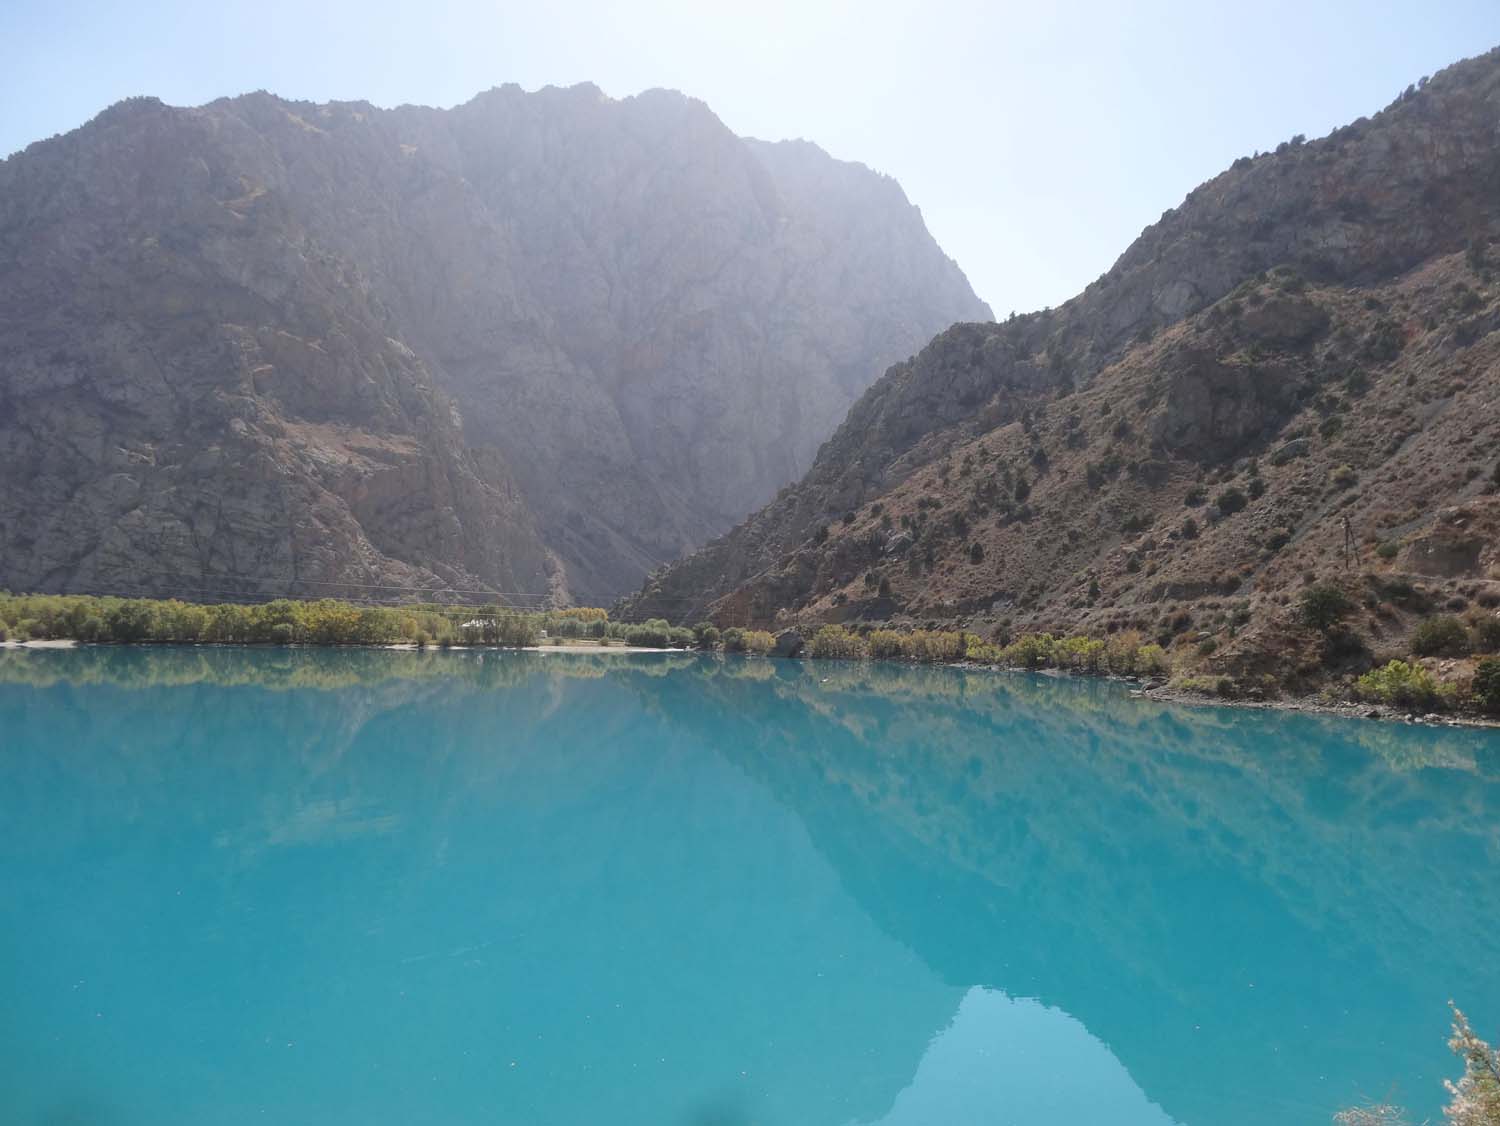 Iskander Kul lake - the colour is just amazing